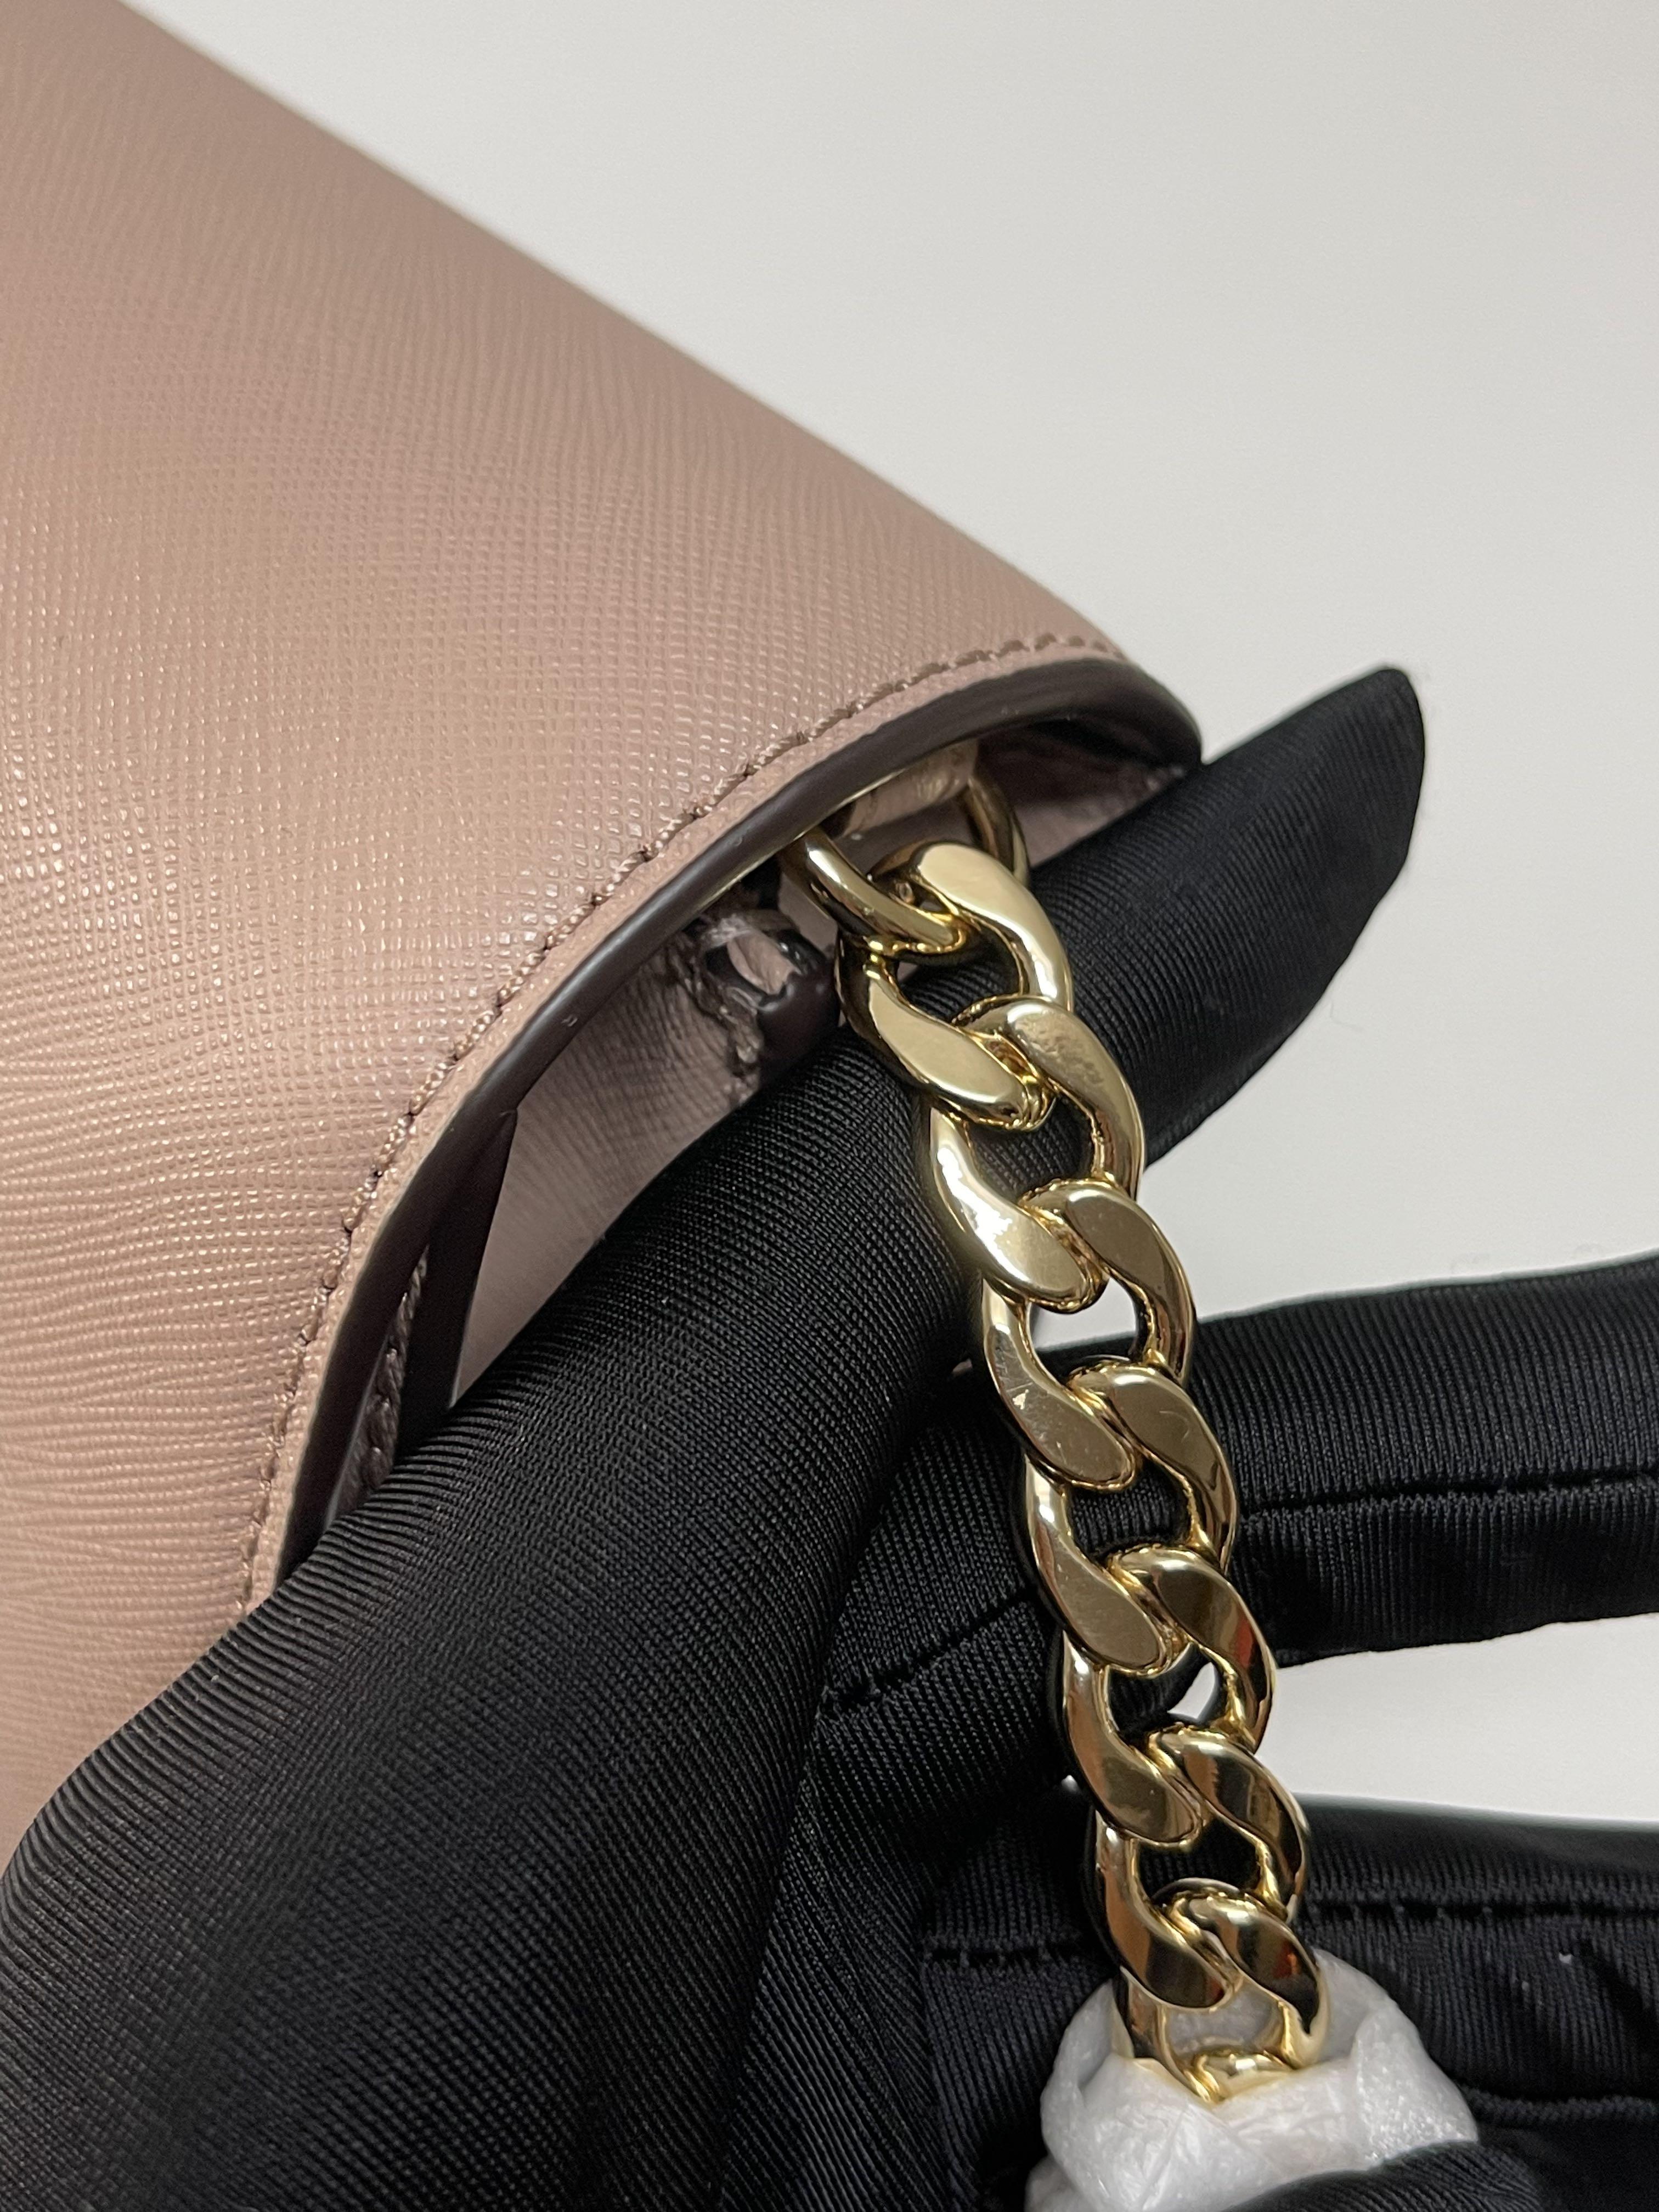 Michael Kors Daniela Large Saffiano Leather Crossbody Bag (Fawn